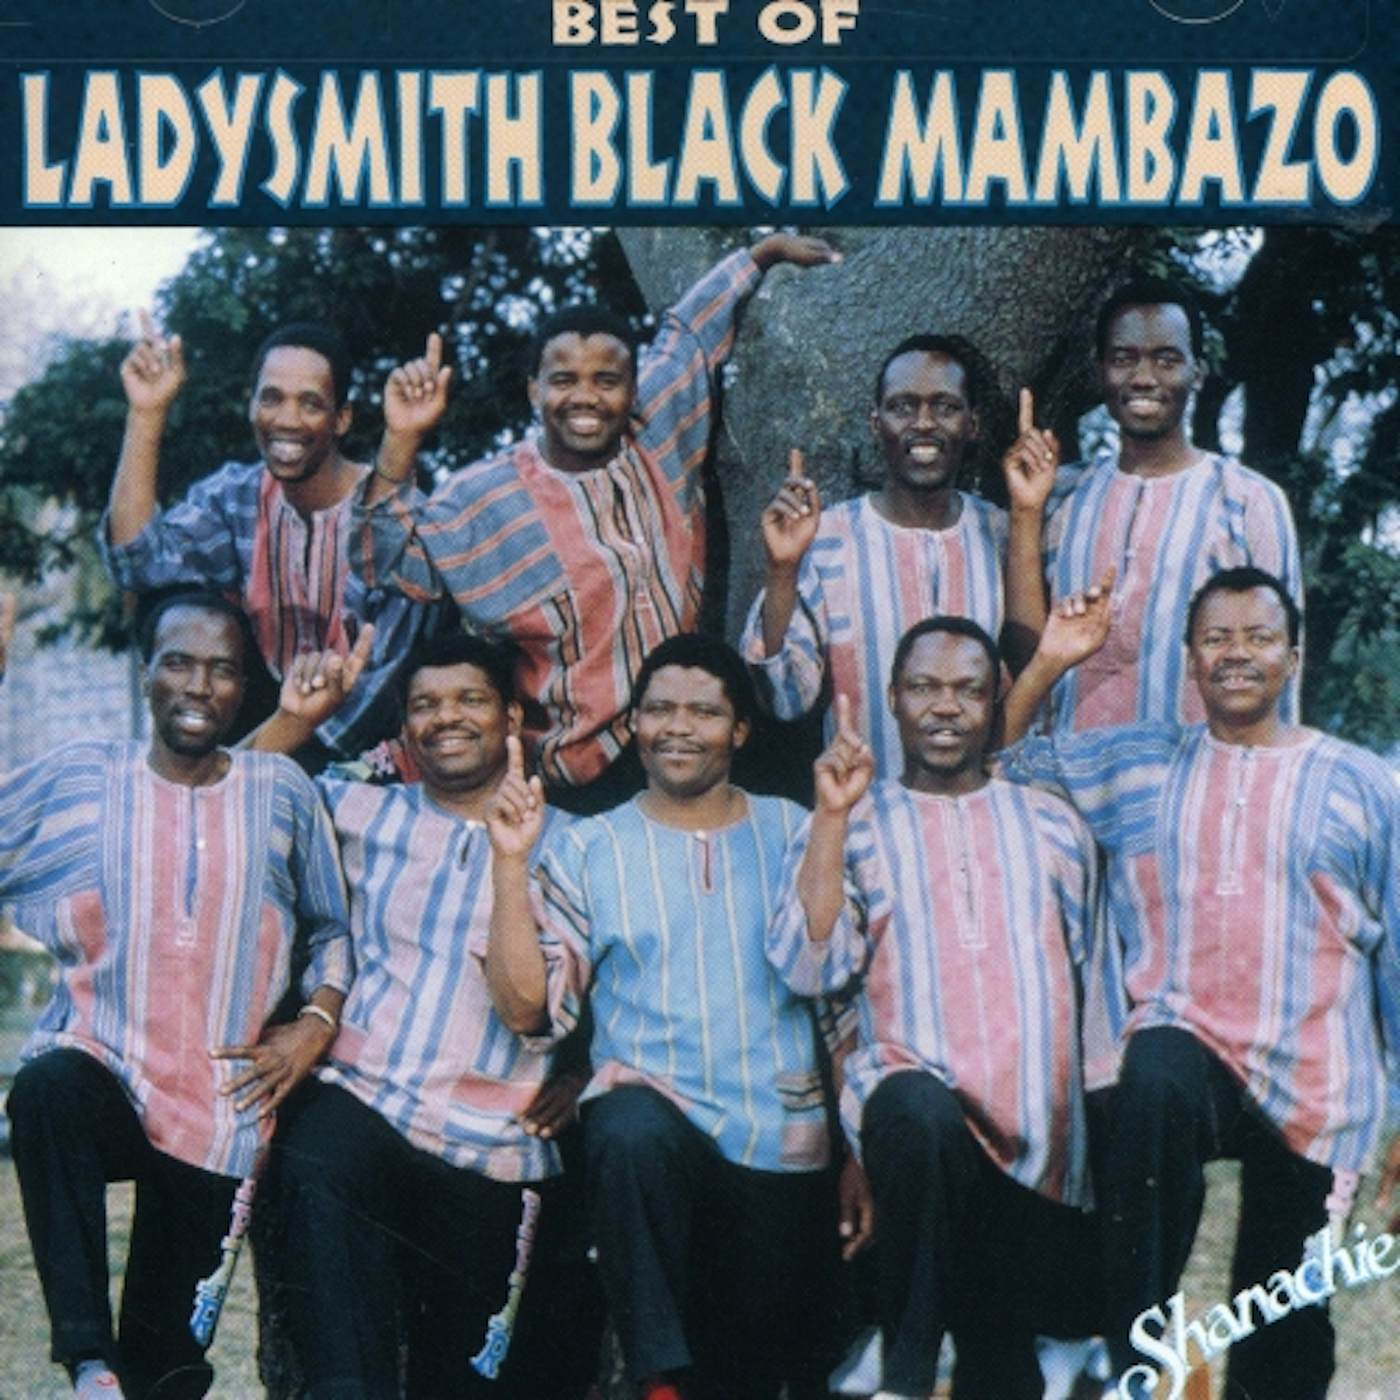 Ladysmith Black Mambazo BEST OF CD